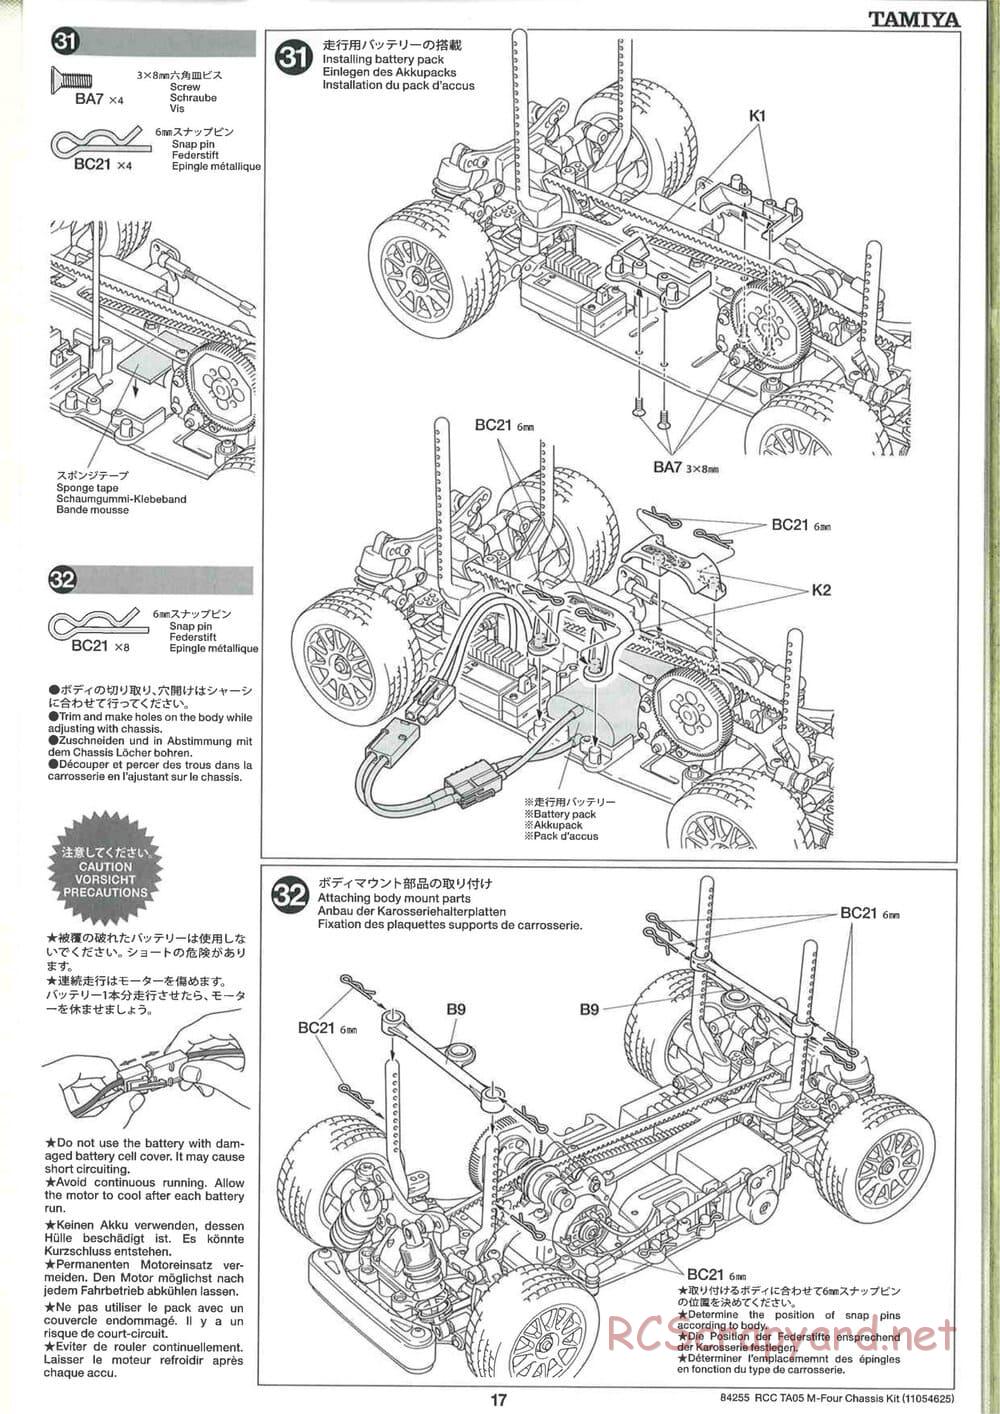 Tamiya - TA05 M-Four Chassis - Manual - Page 17